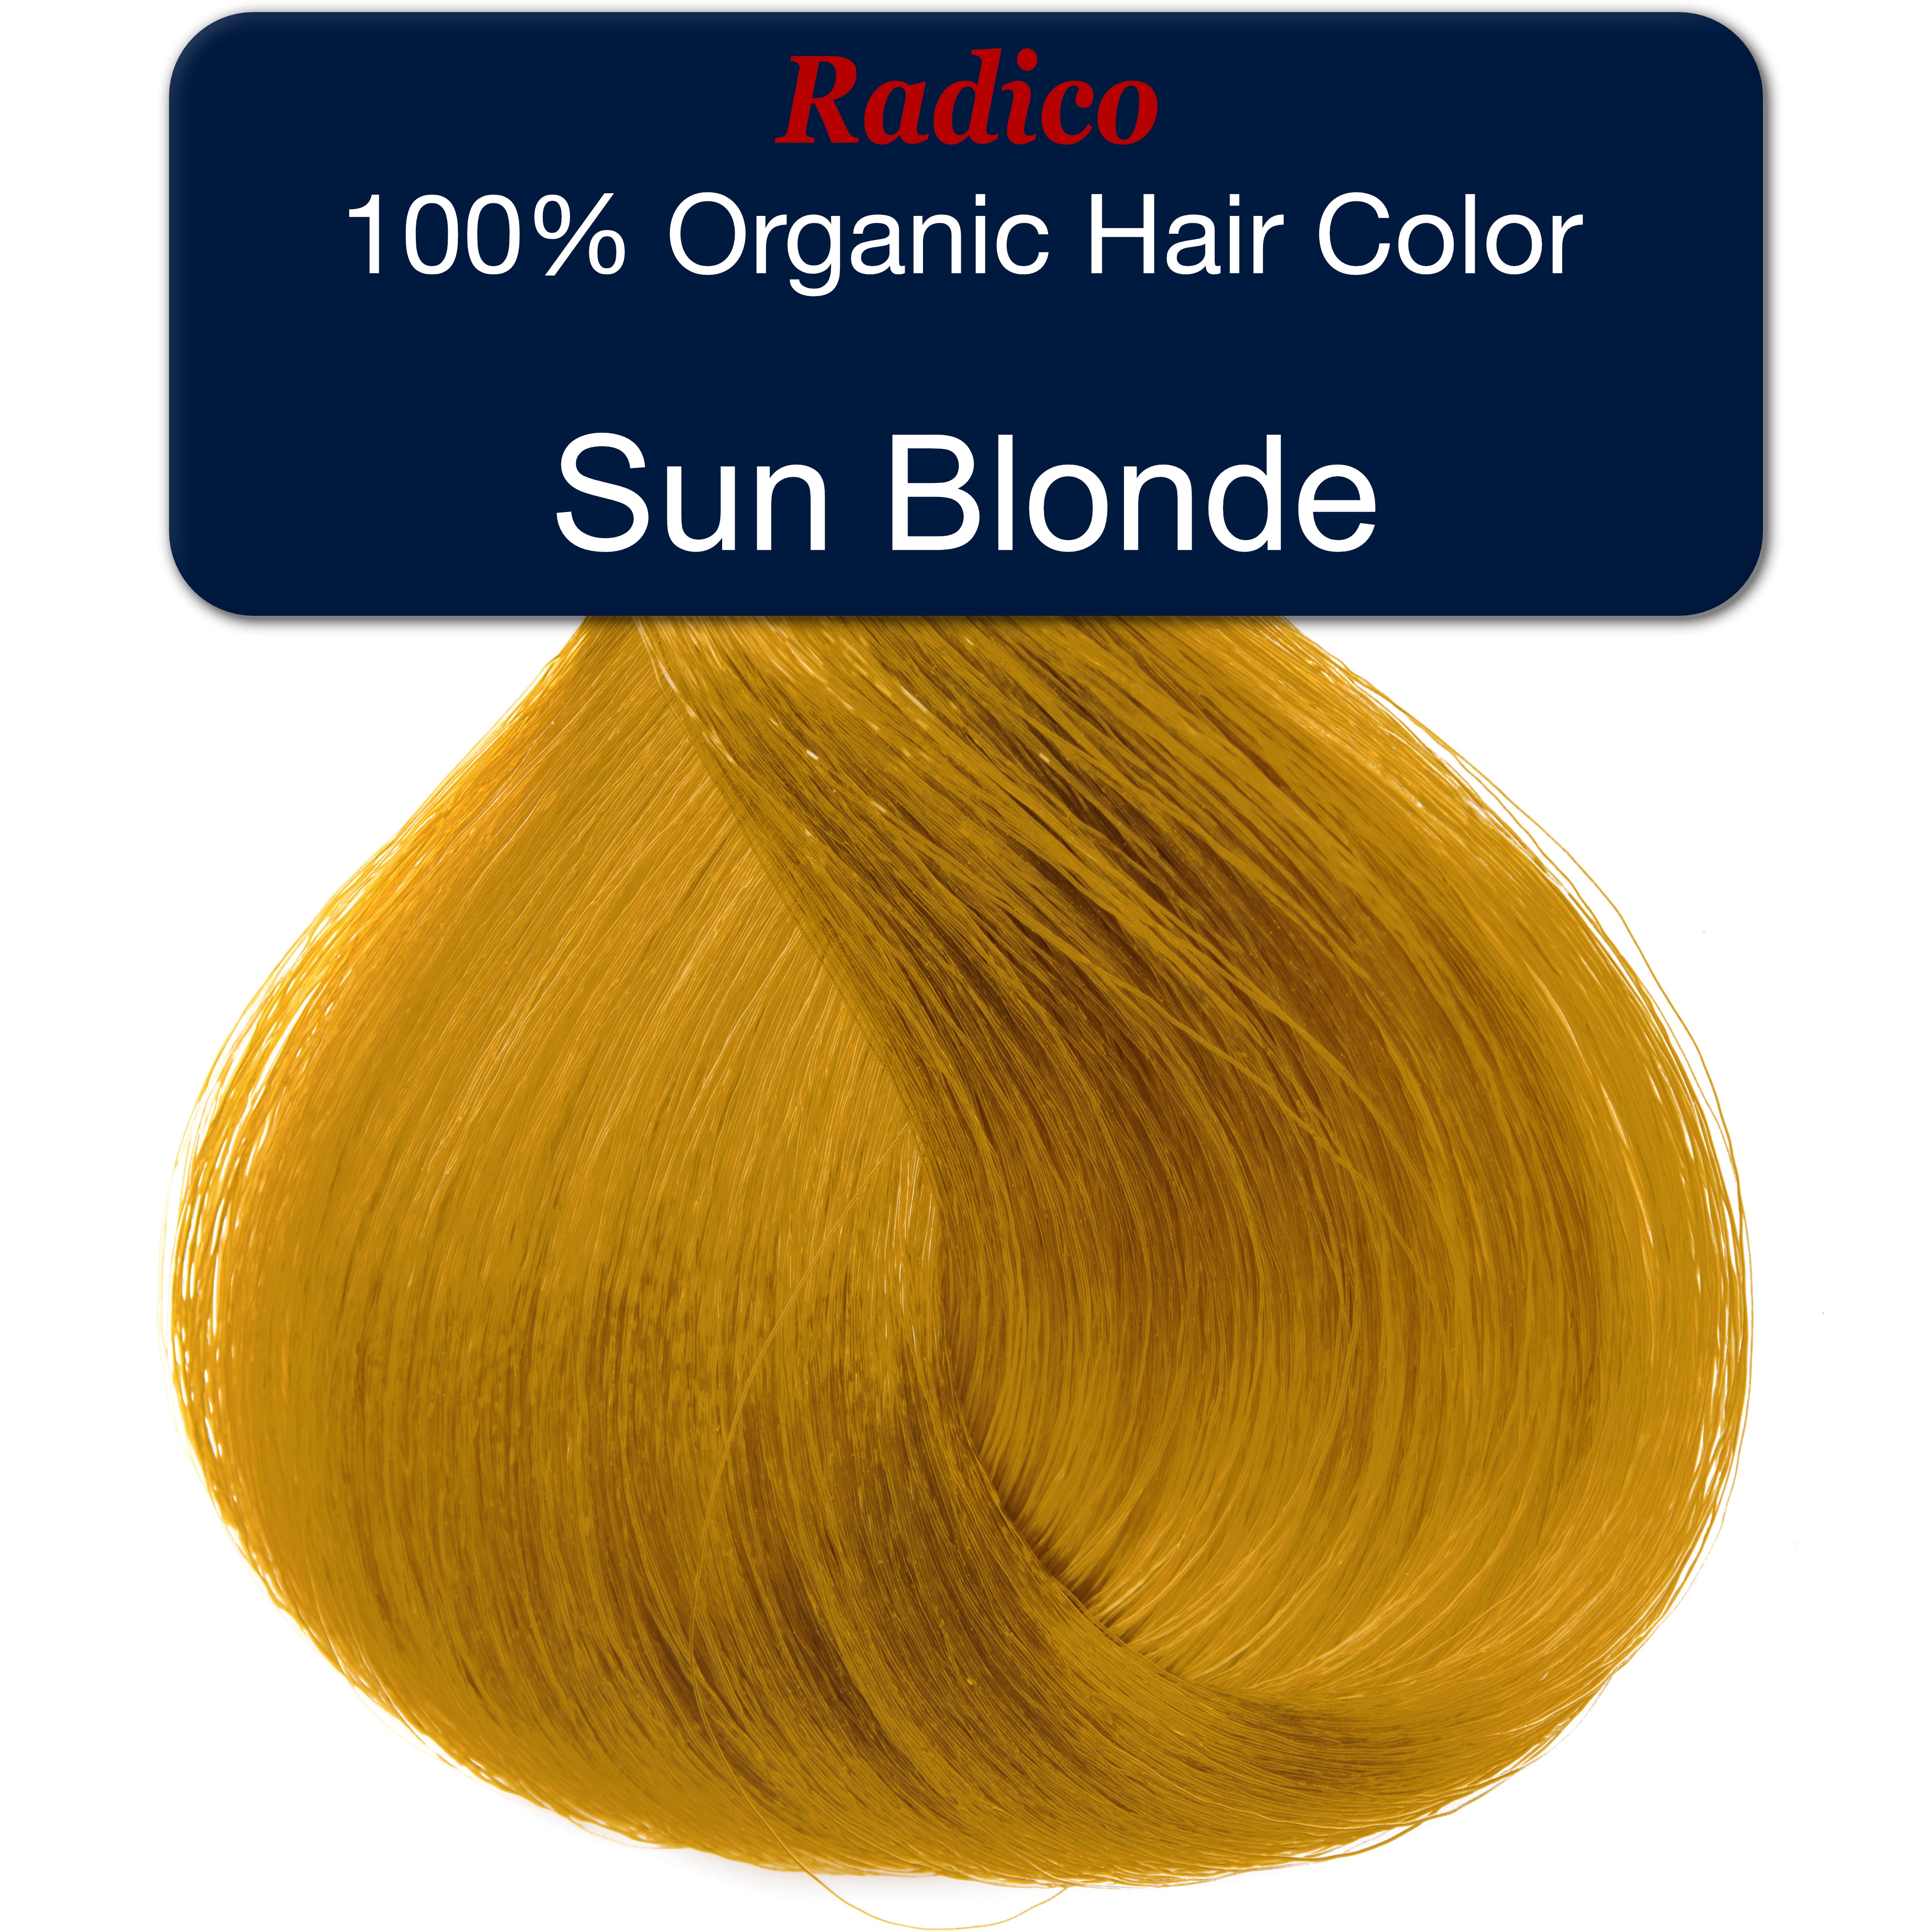 Sun Blonde Hair Color Sample